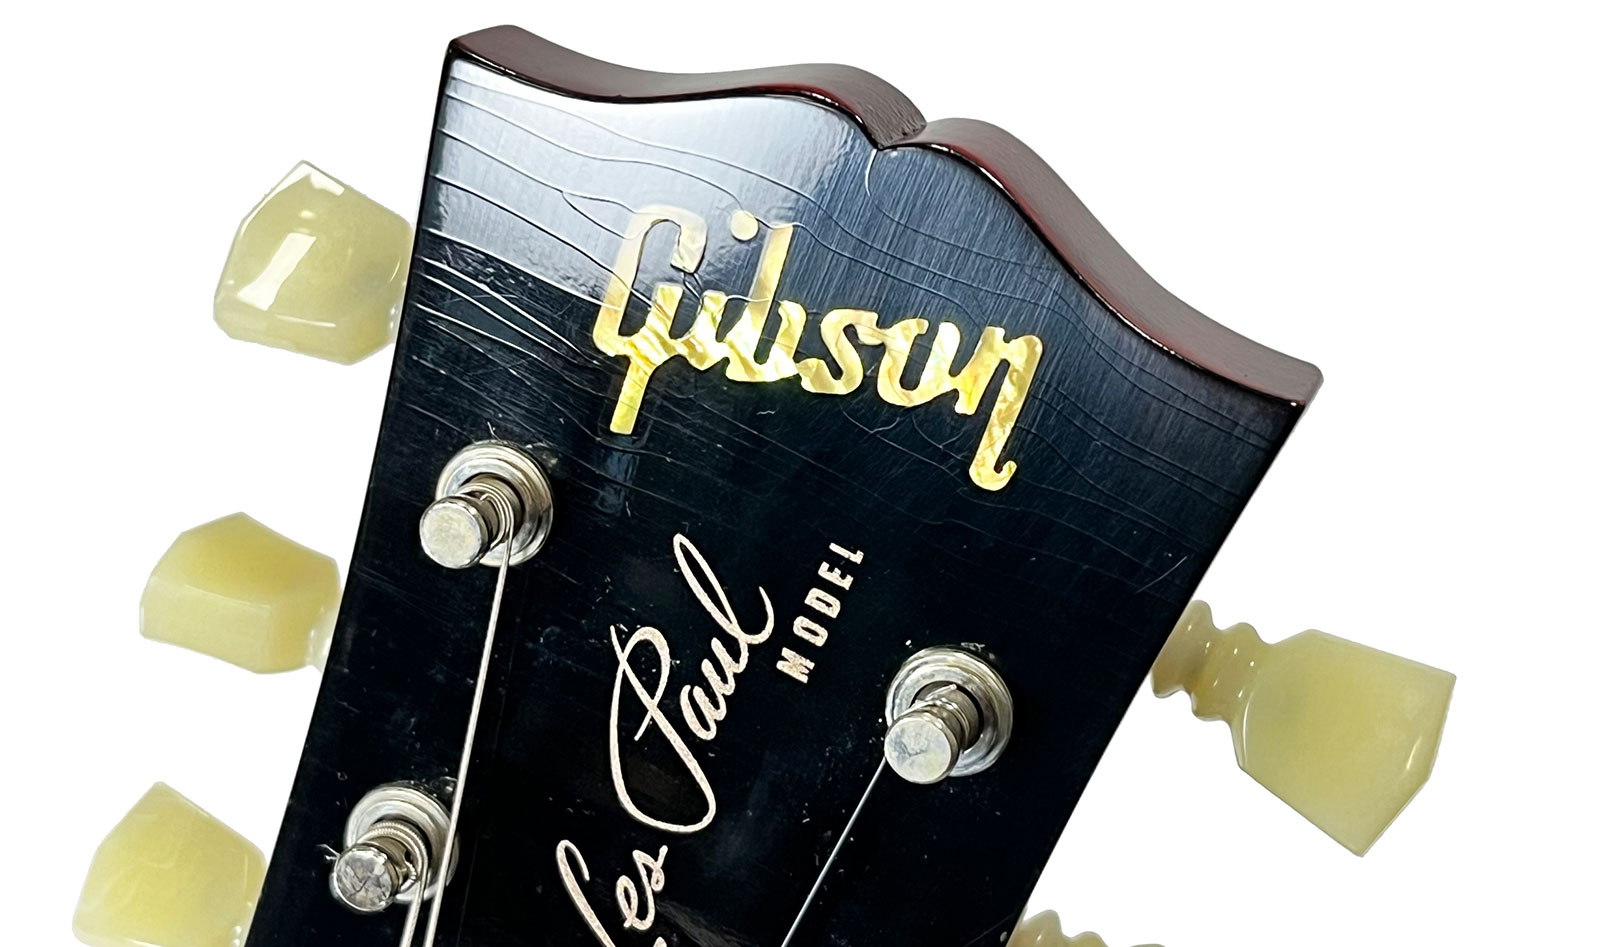 Gibson Custom Shop Les Paul Standard 1960 Reissue 2h Ht Rw #03362 - Murphy Lab Ultra Light Aged Wide Tomato Burst - Enkel gesneden elektrische gitaar 